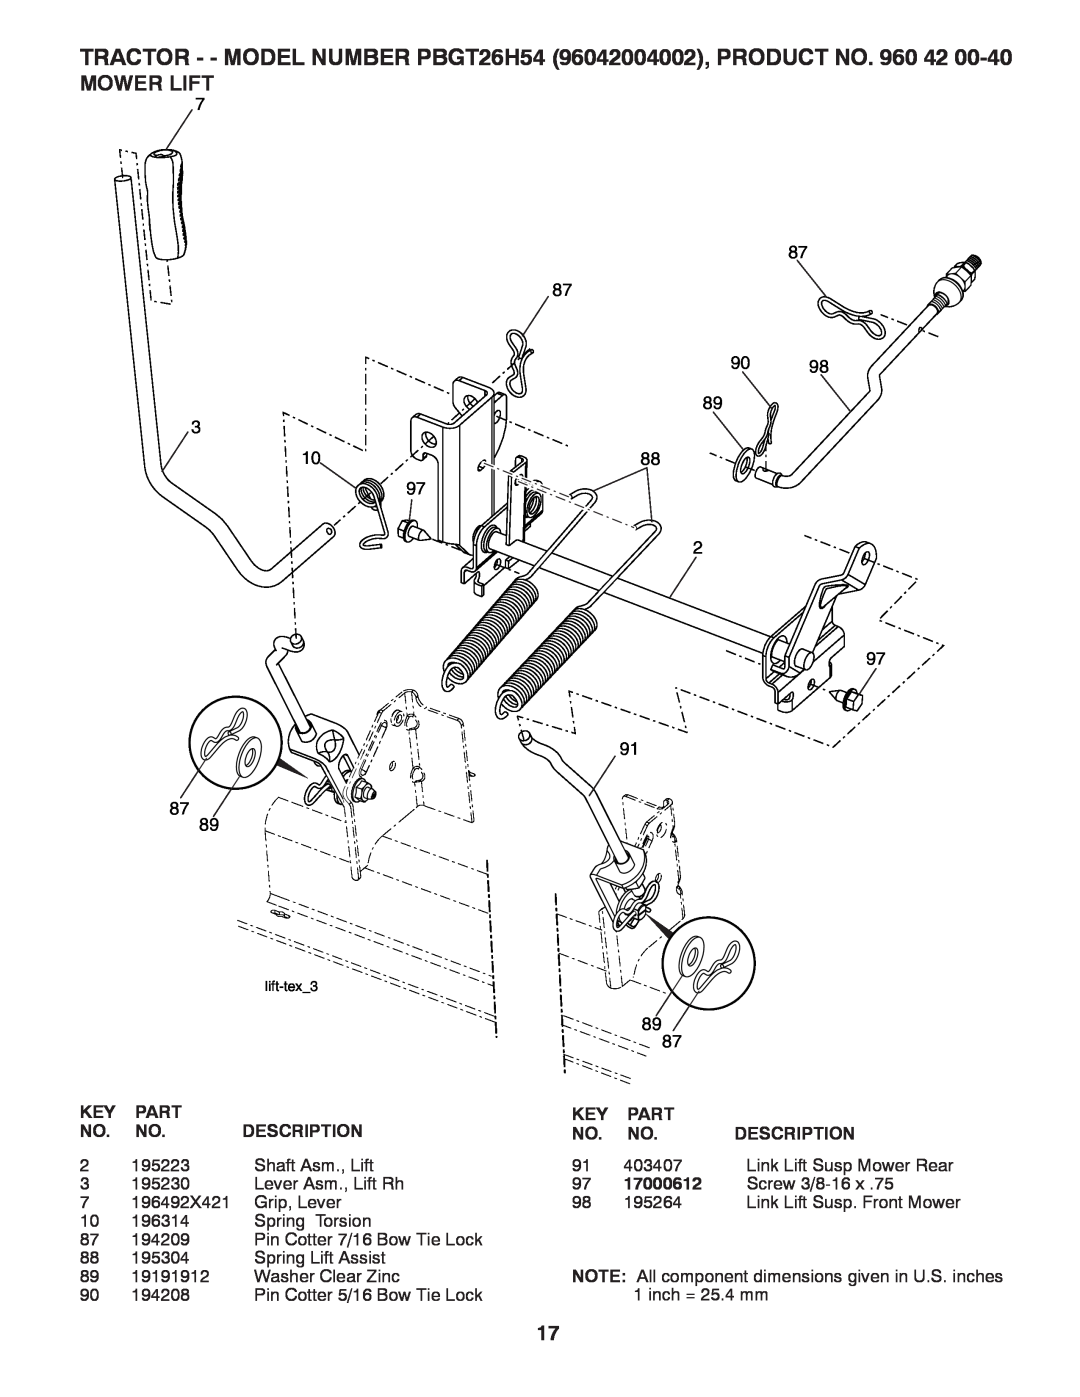 Poulan 417307 manual Mower Lift, TRACTOR - - MODEL NUMBER PBGT26H54 96042004002, PRODUCT NO, lift-tex3 